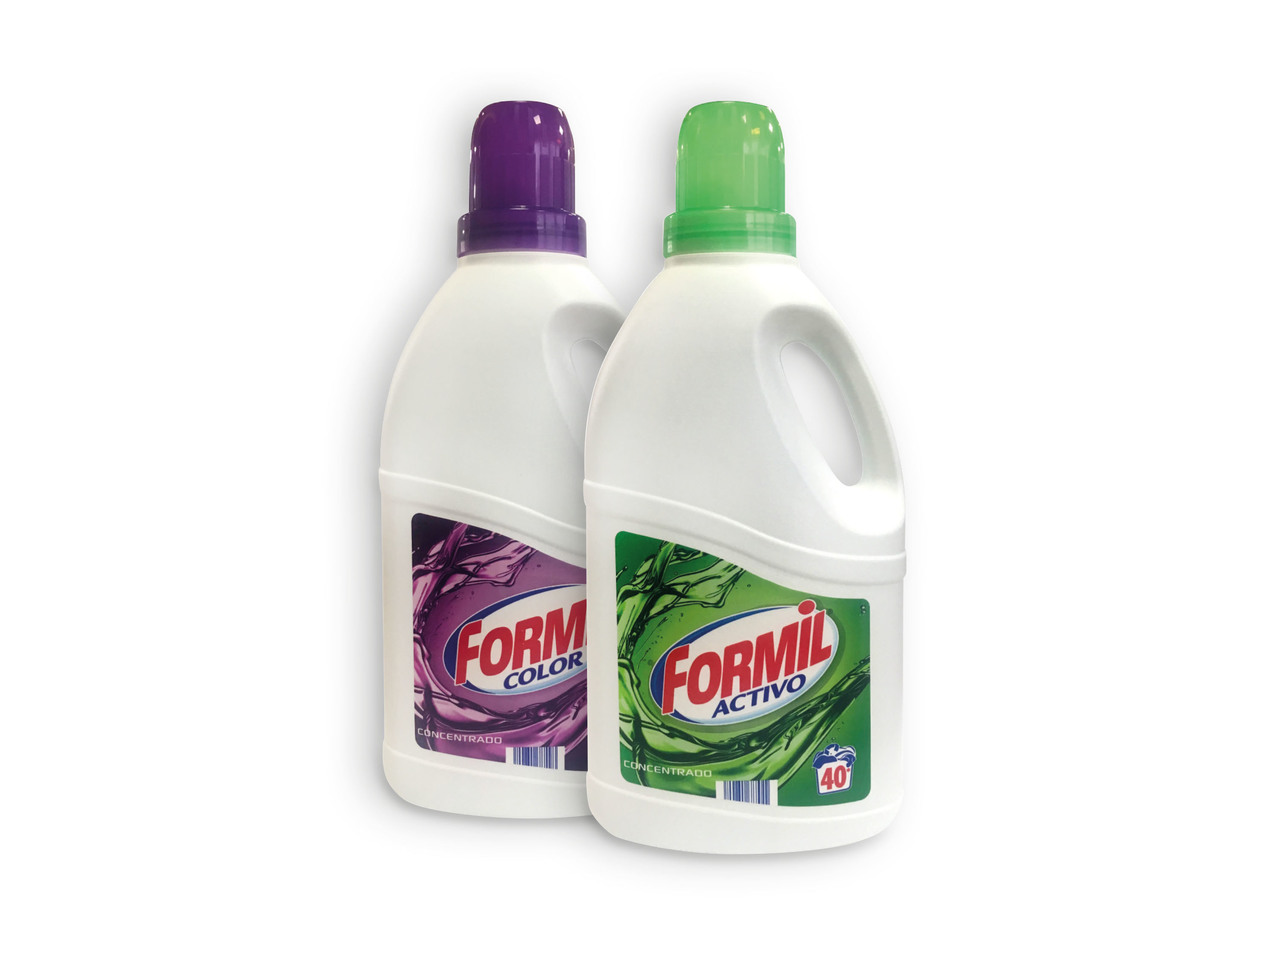 FORMIL(R) Detergente Líquido Gel para Roupa / Cores